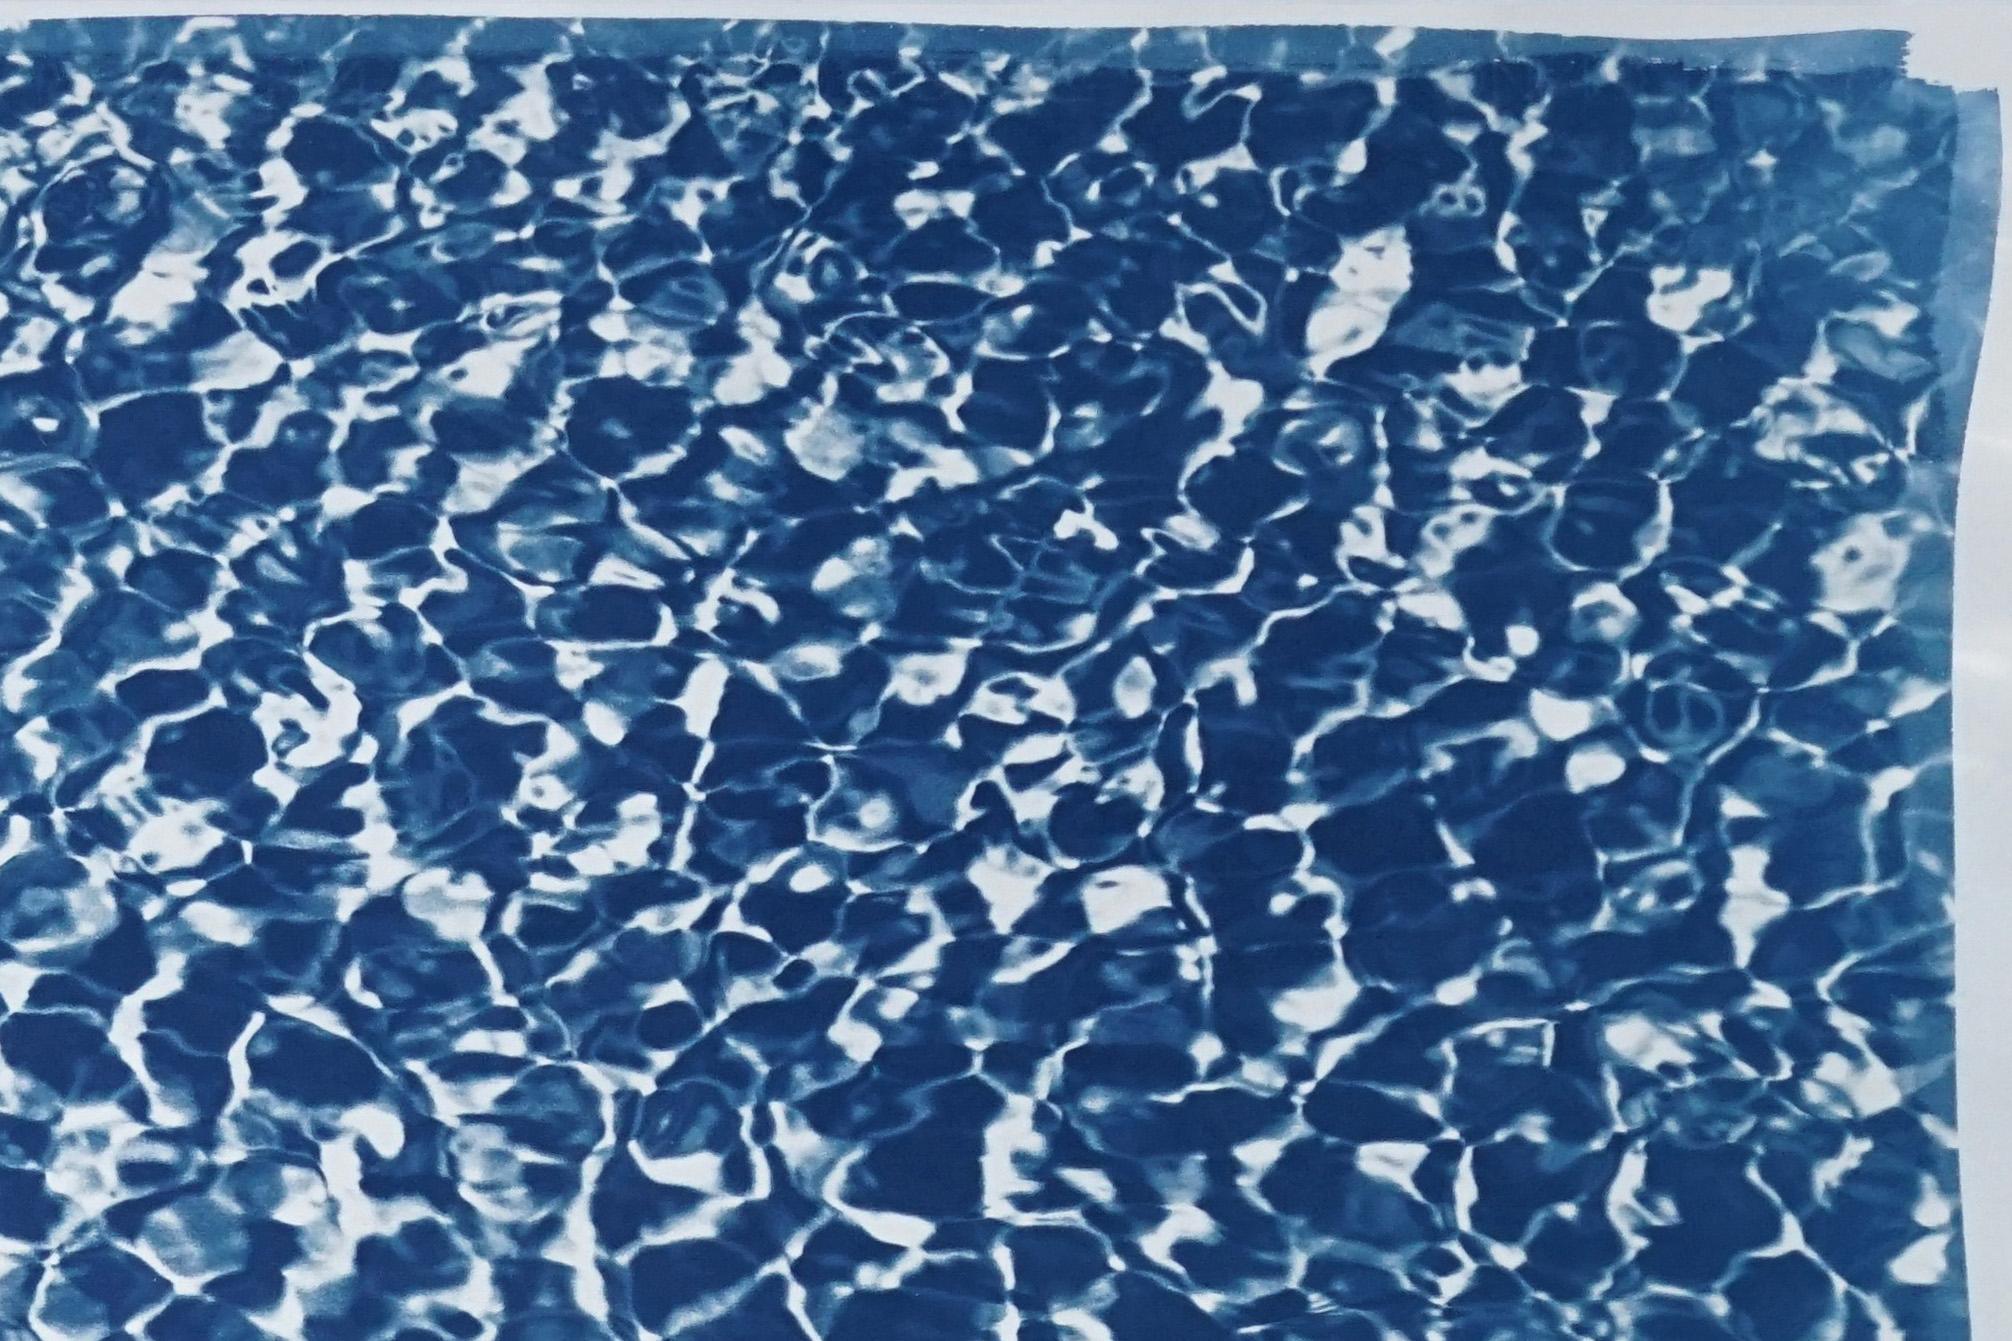 Infinity Pool Water Reflections, Blue & White Pattern, Handmade Cyanotype Print 2